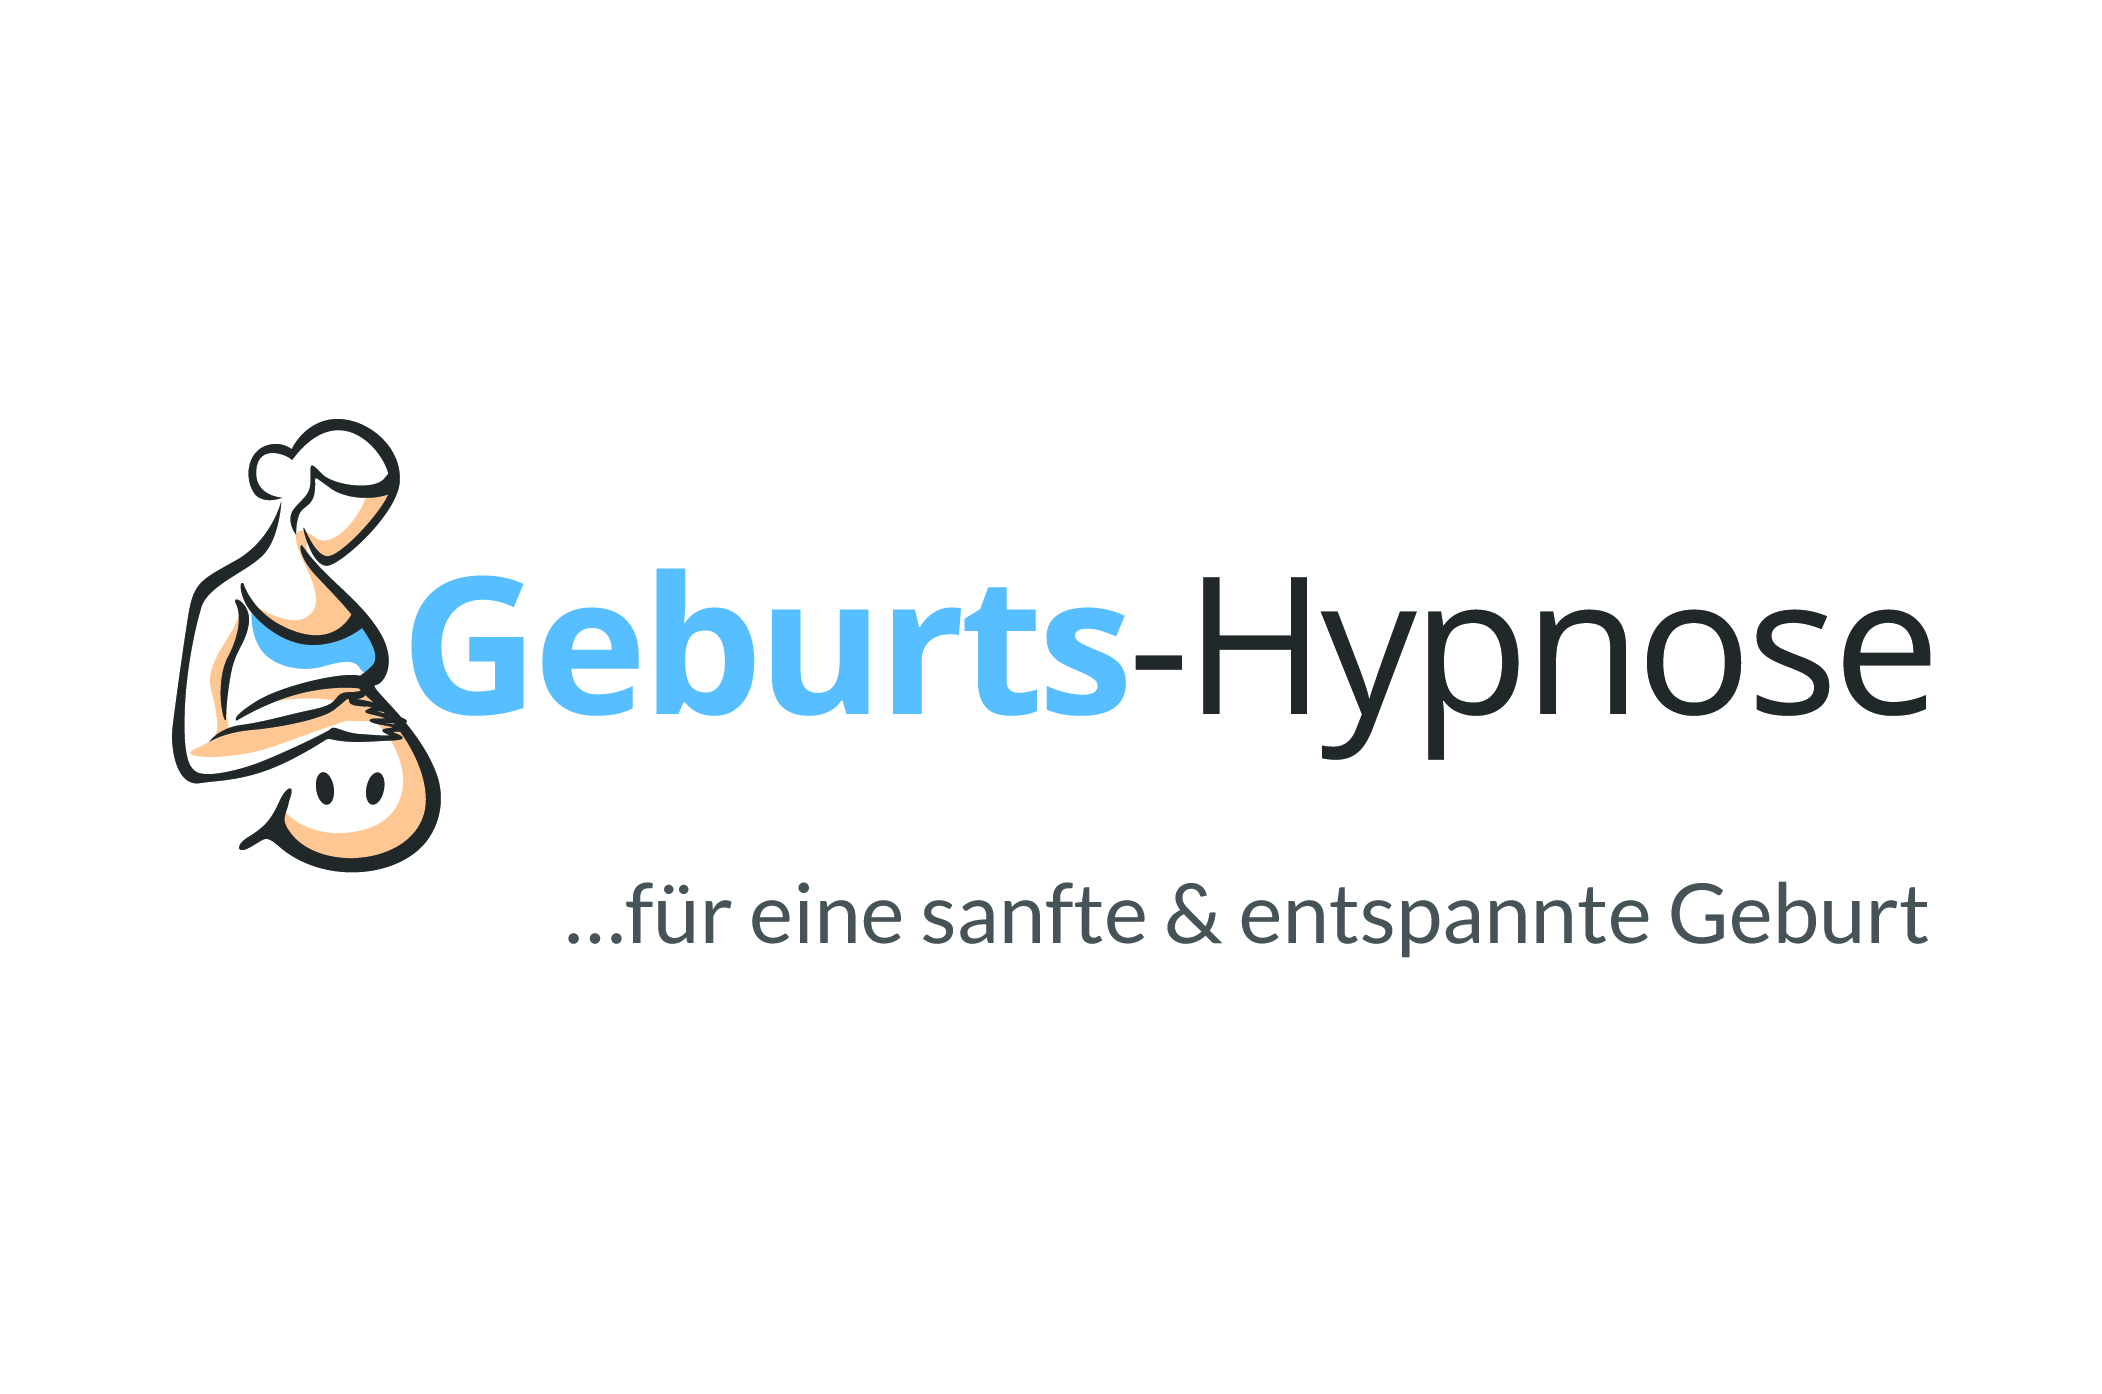 Podcast Episode 68 – Geburts-Hypnose